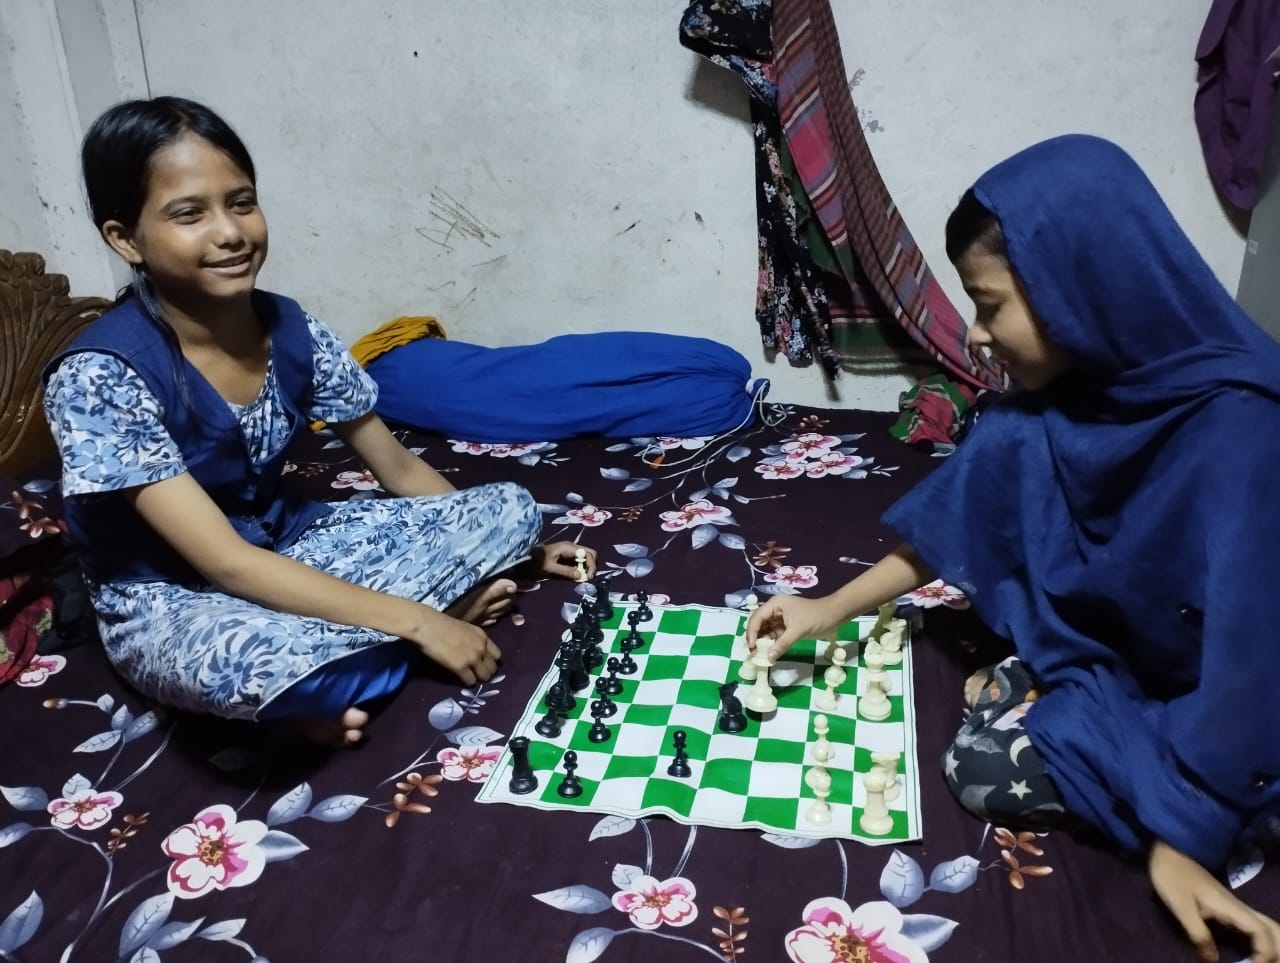 Lamia and Taiyeba are playing chess